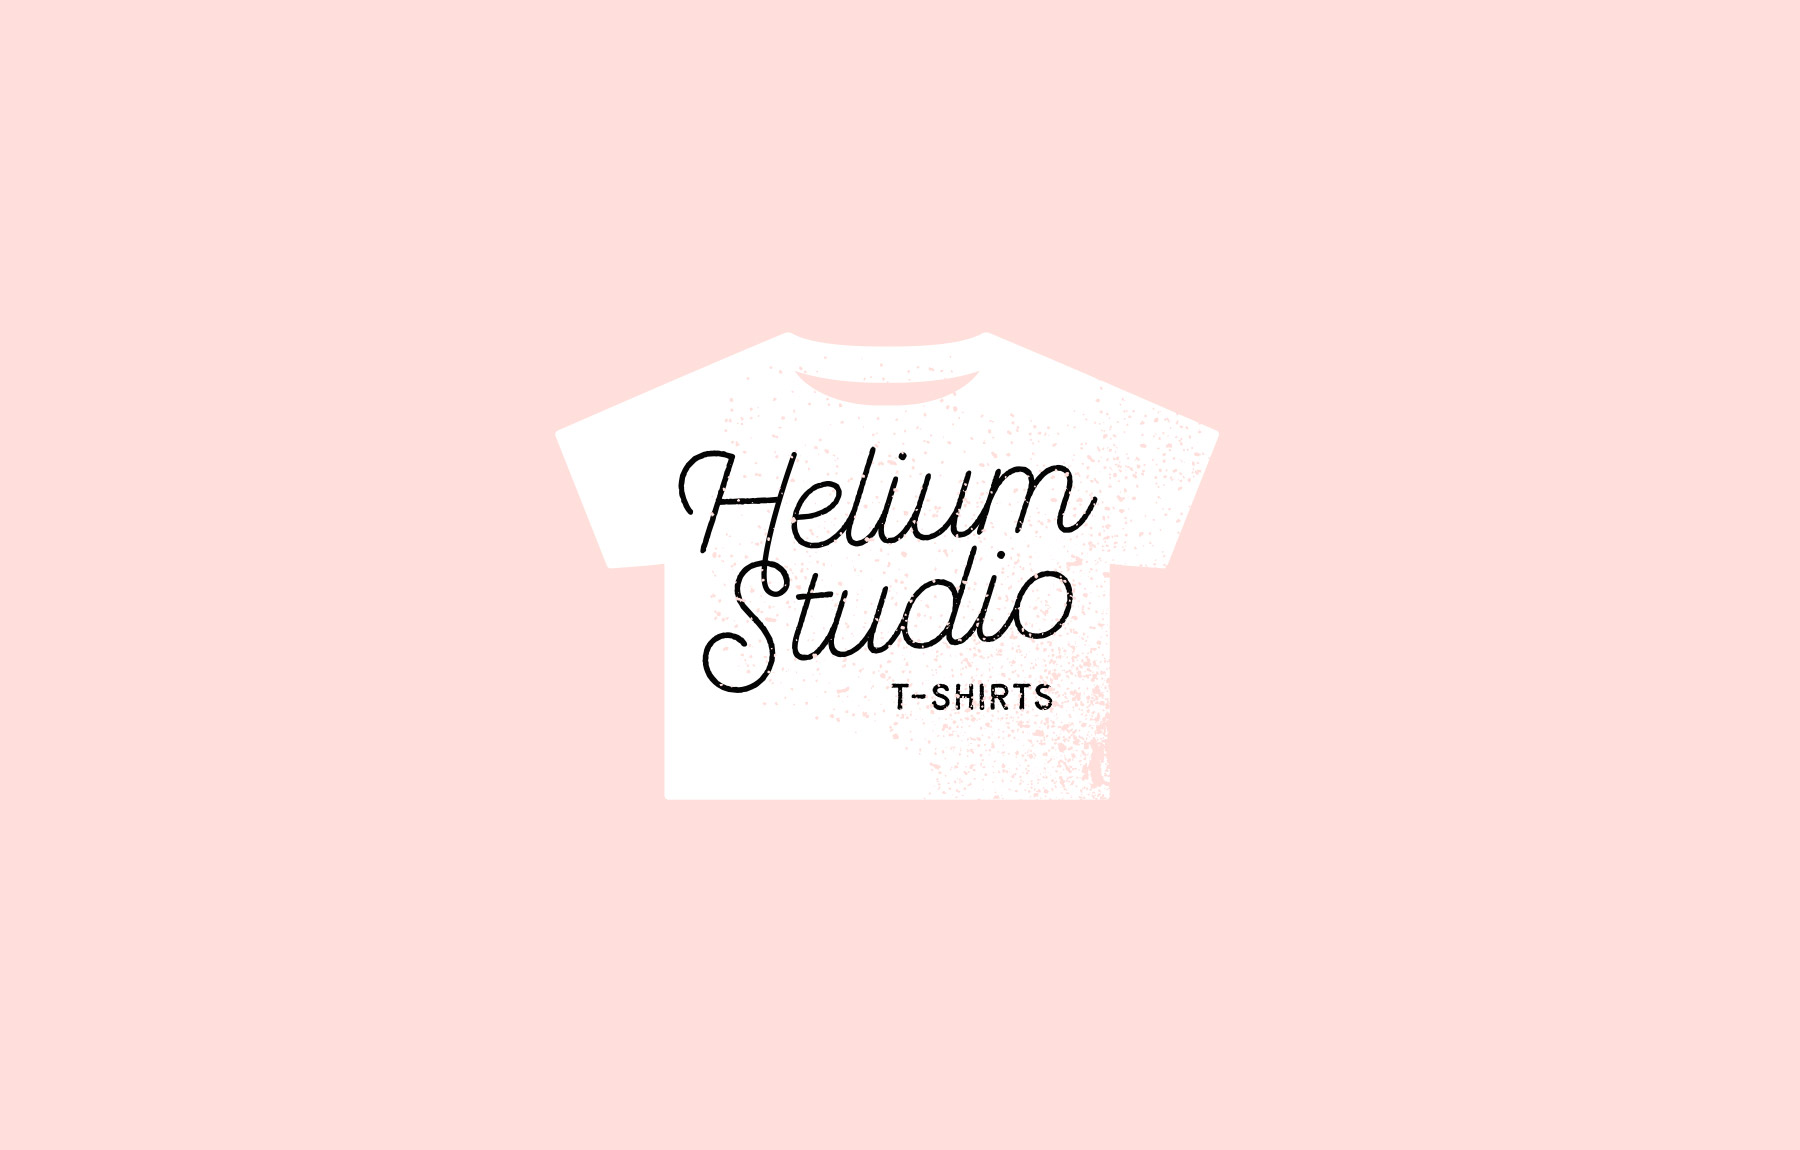 Helium Studio T-shirts company logo